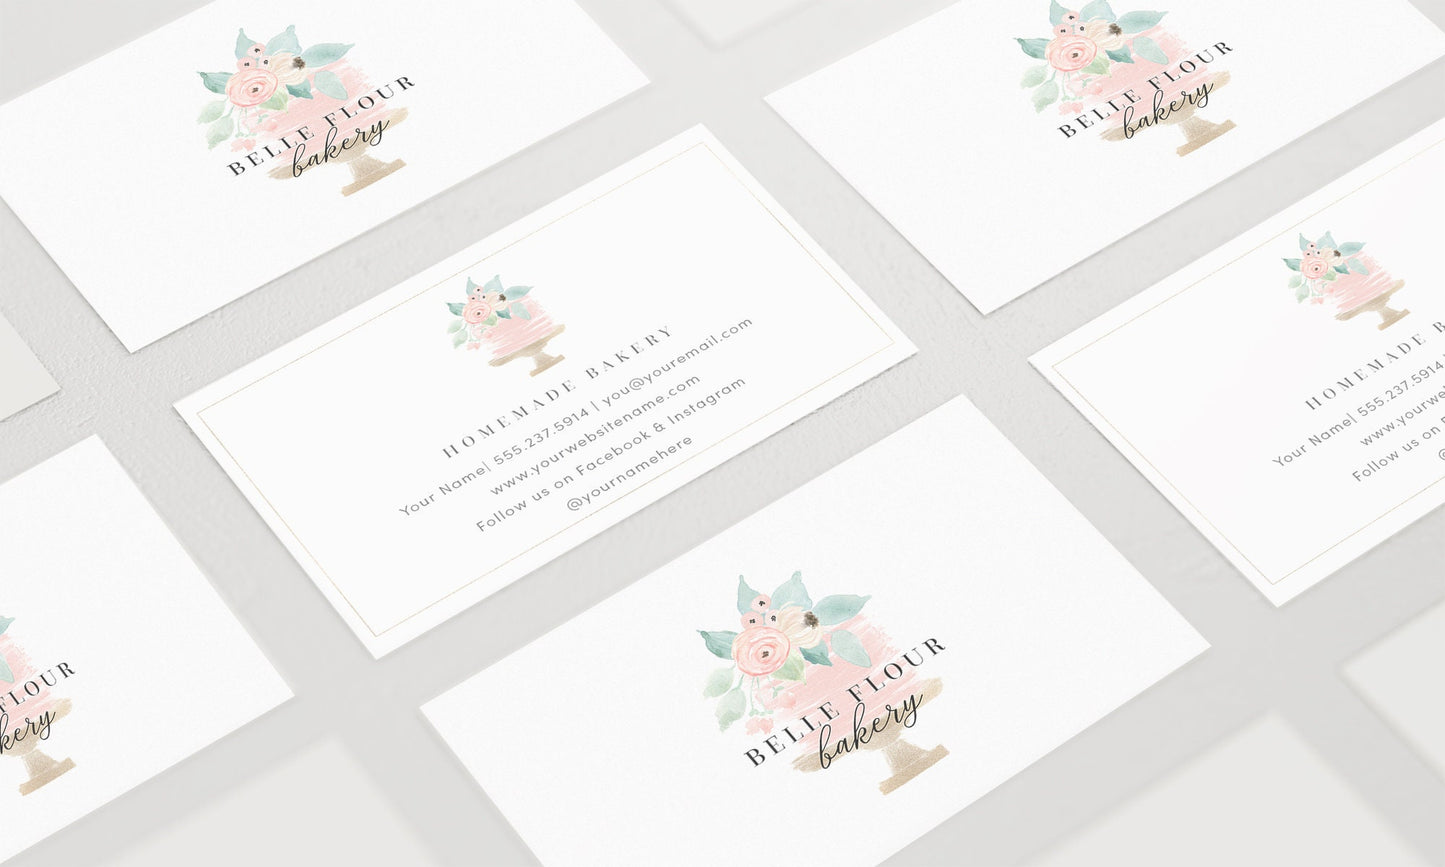 Belle Flour Bakery | Premade Business Card Design | Cake, Wedding, Floral